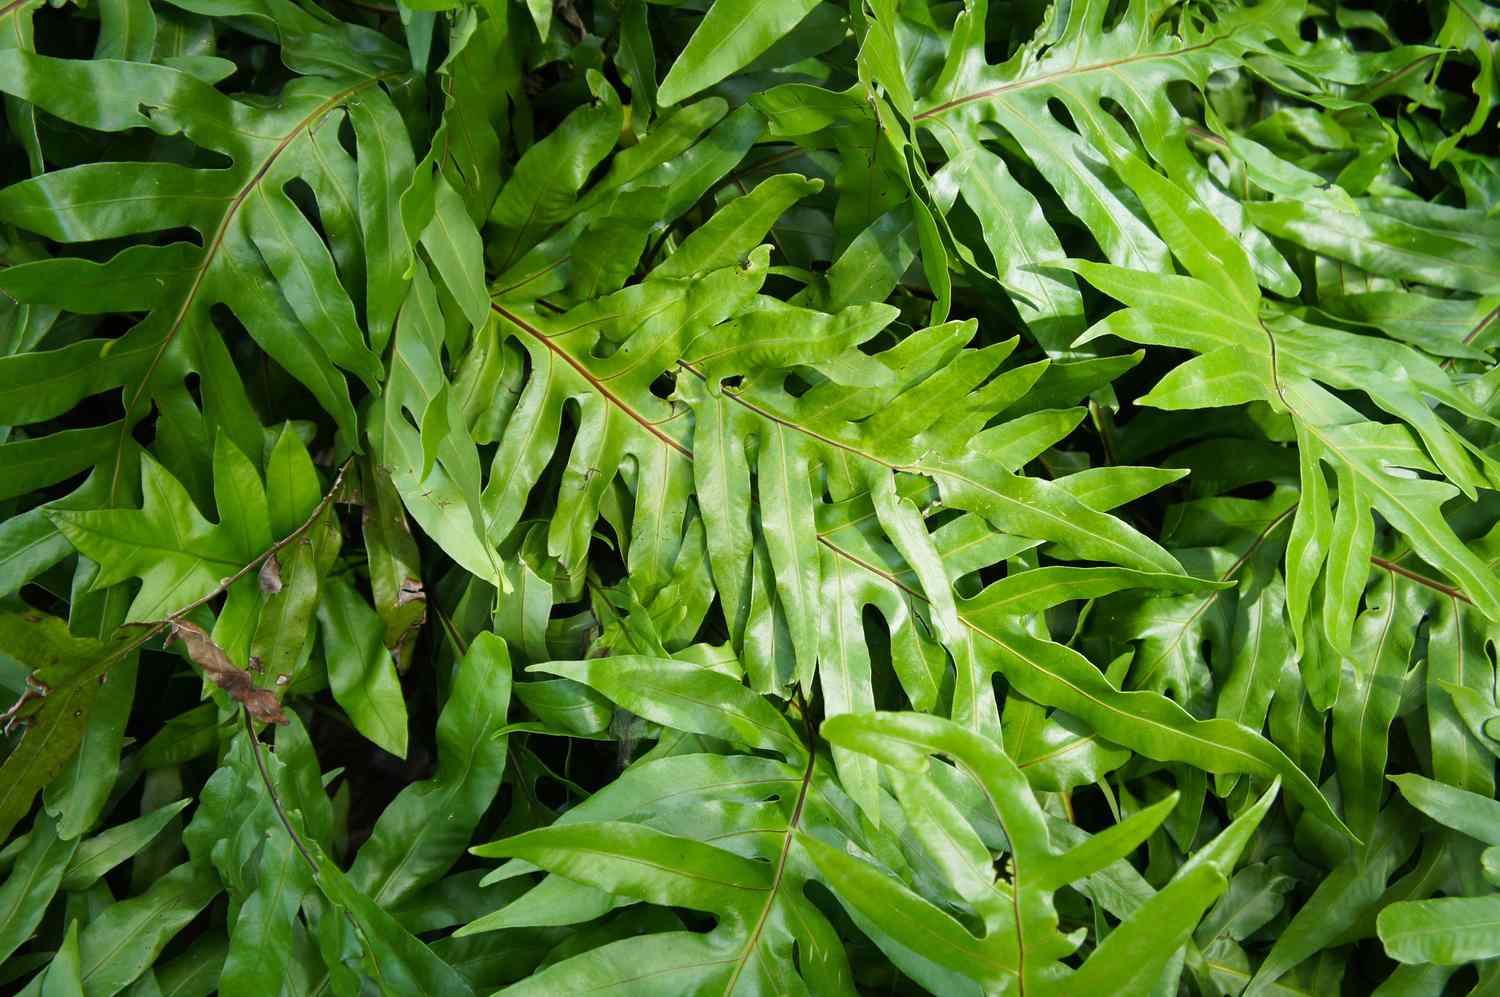 Close up of Kangaroo fern leaves